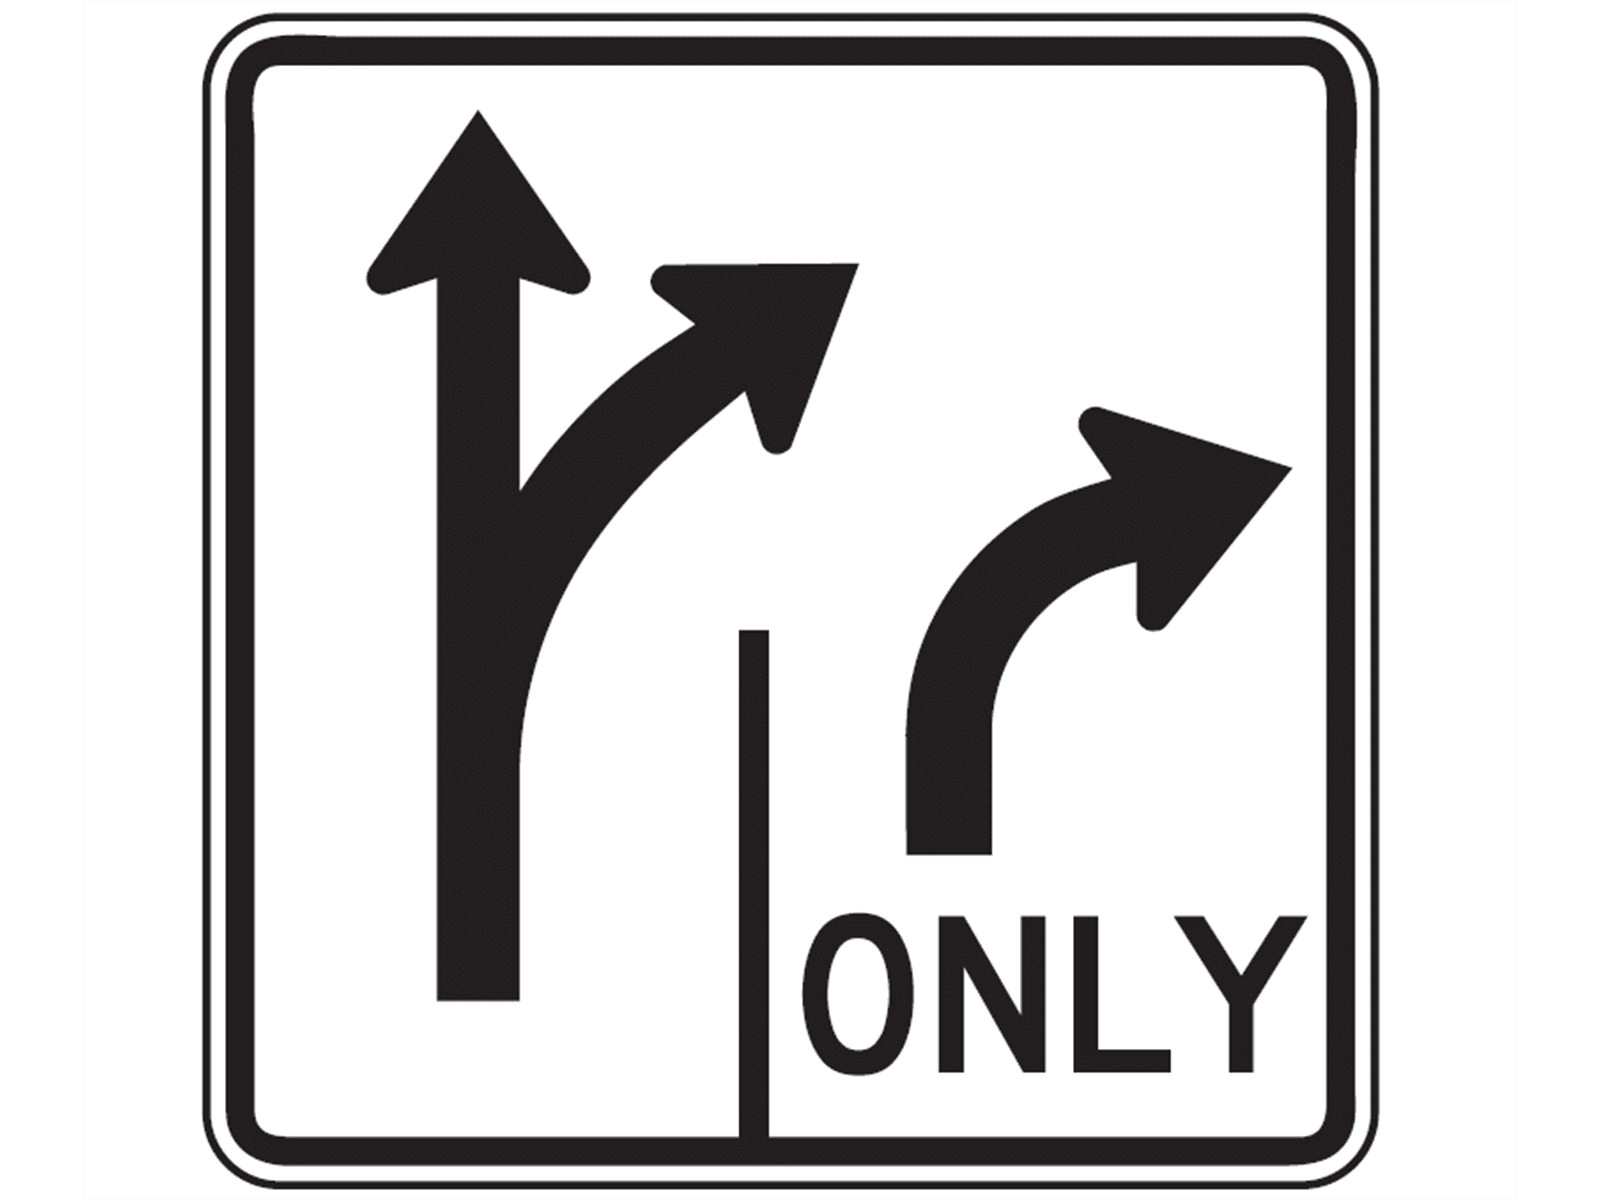 Lane Use Control Sign R3-8L - R3: Lane Usage and Turns